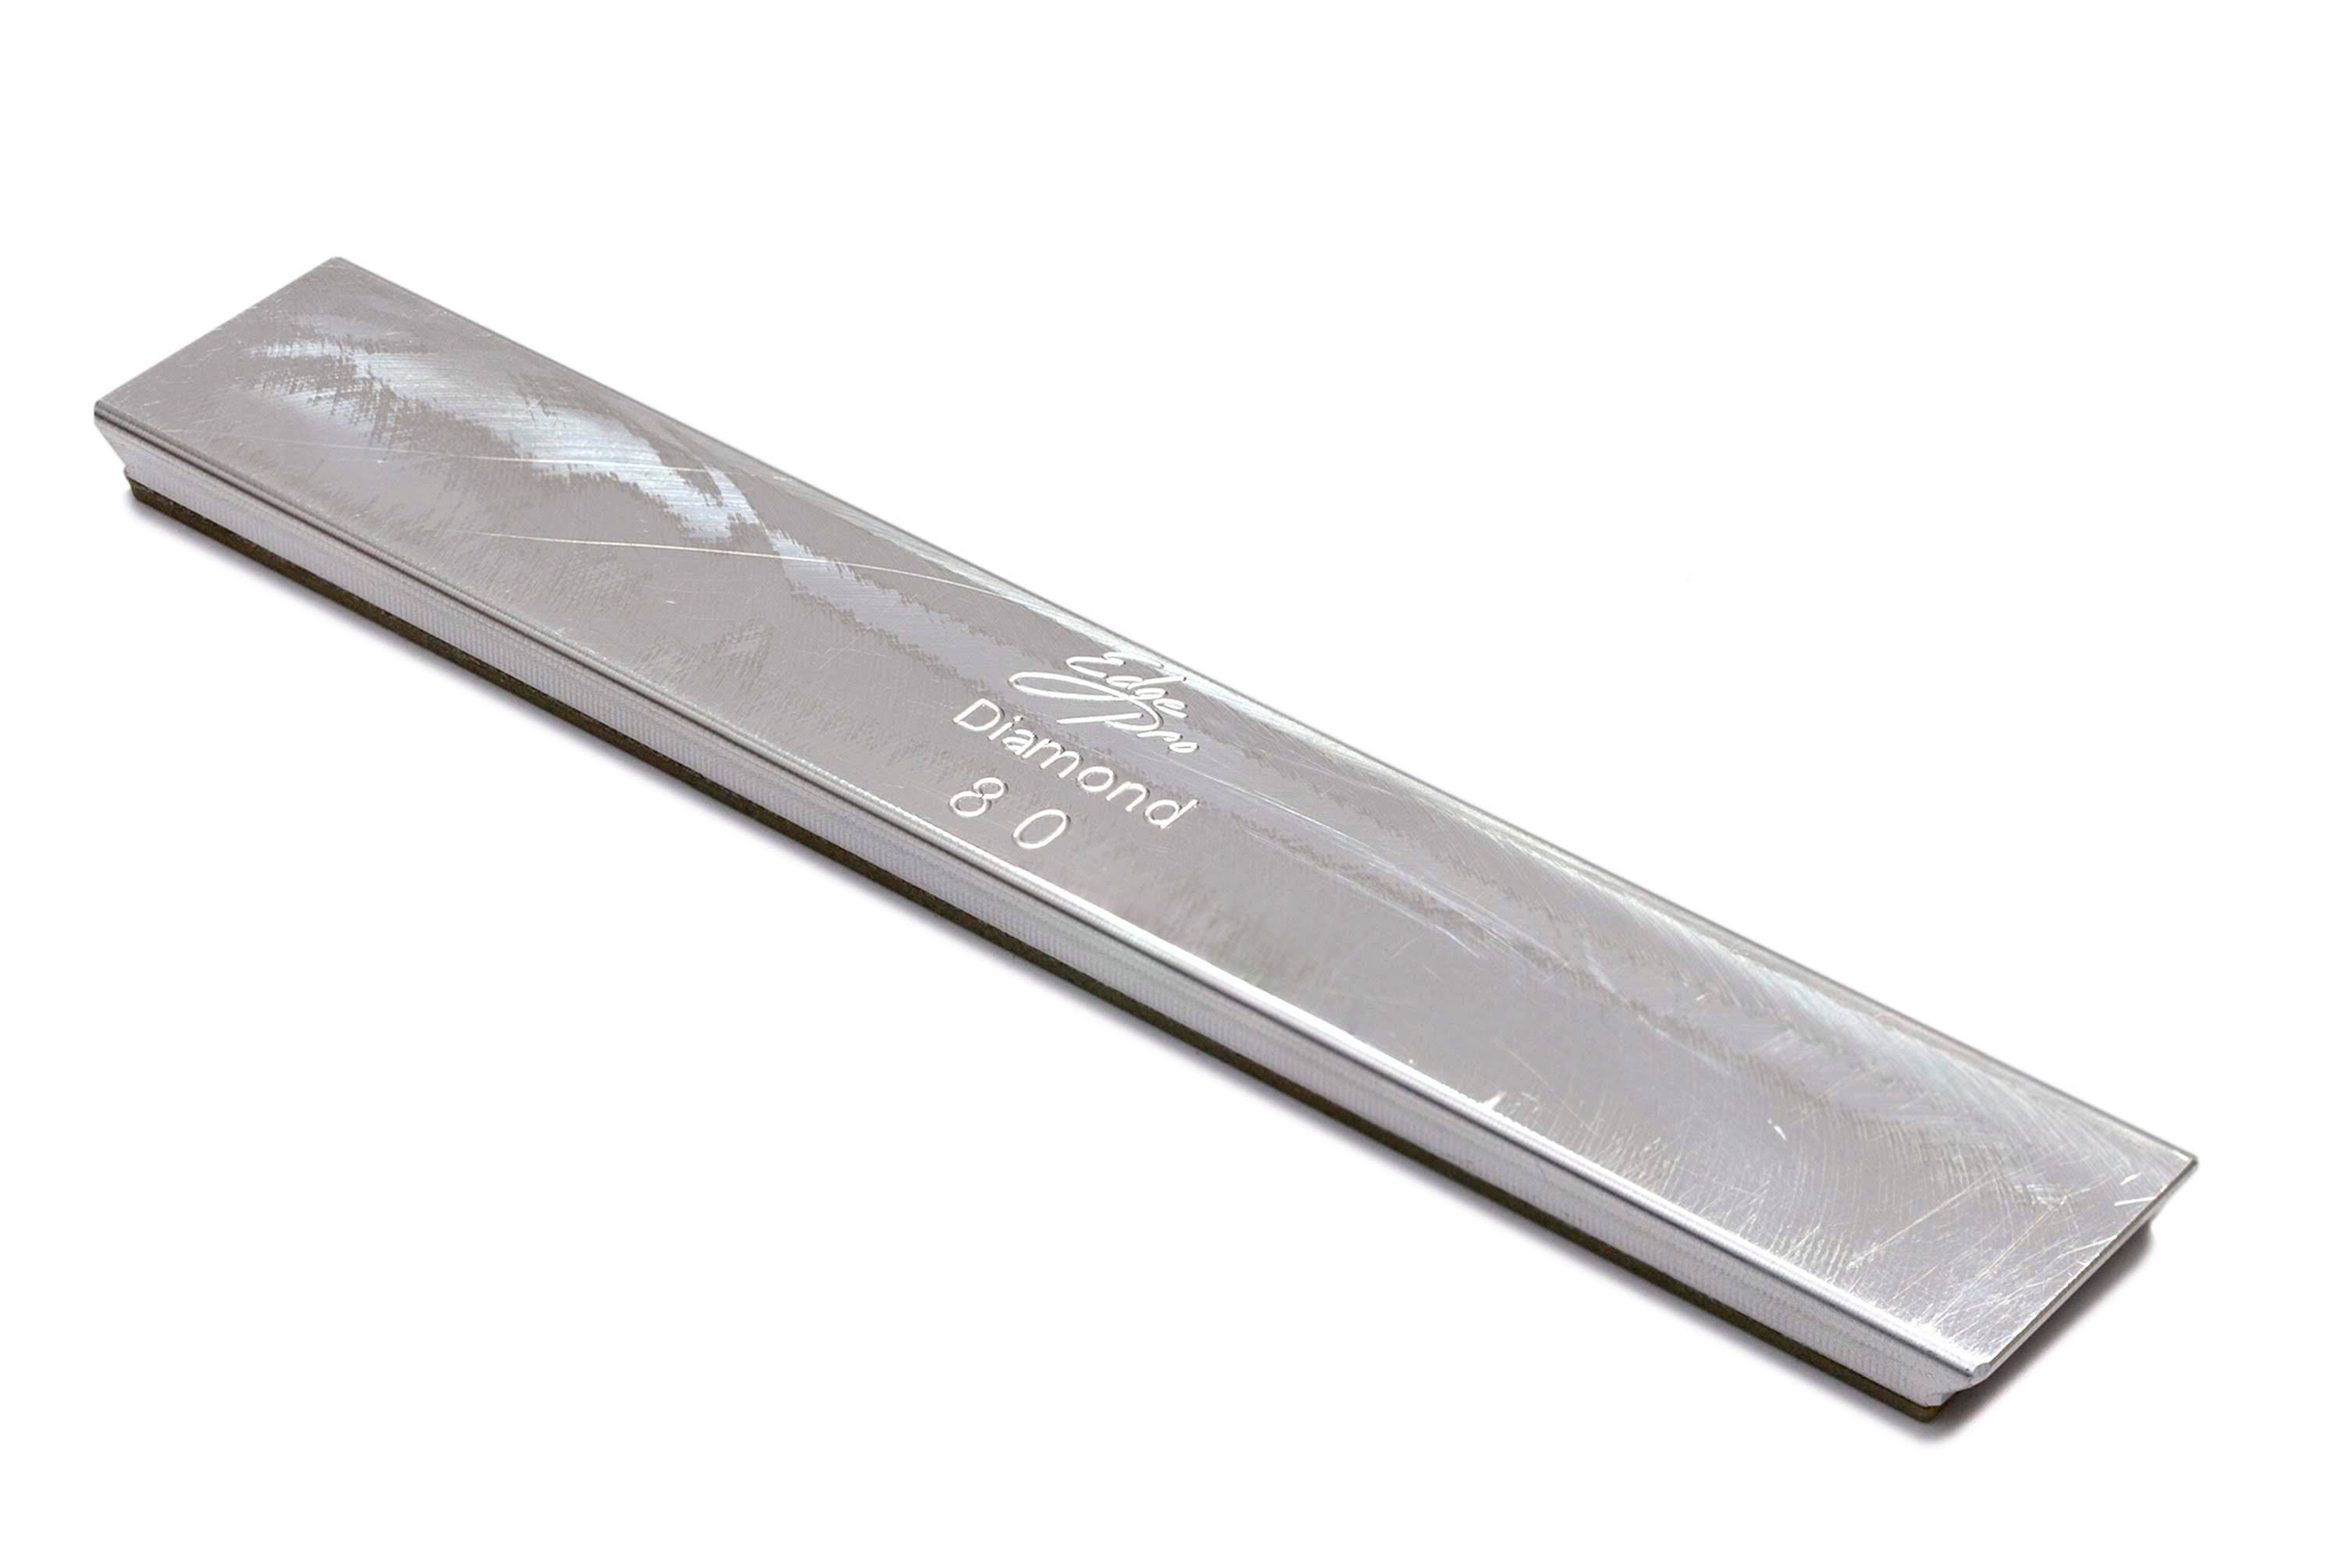 Edge Pro Pro 3 Kit - Professional Knife Sharpening System – Oldawan